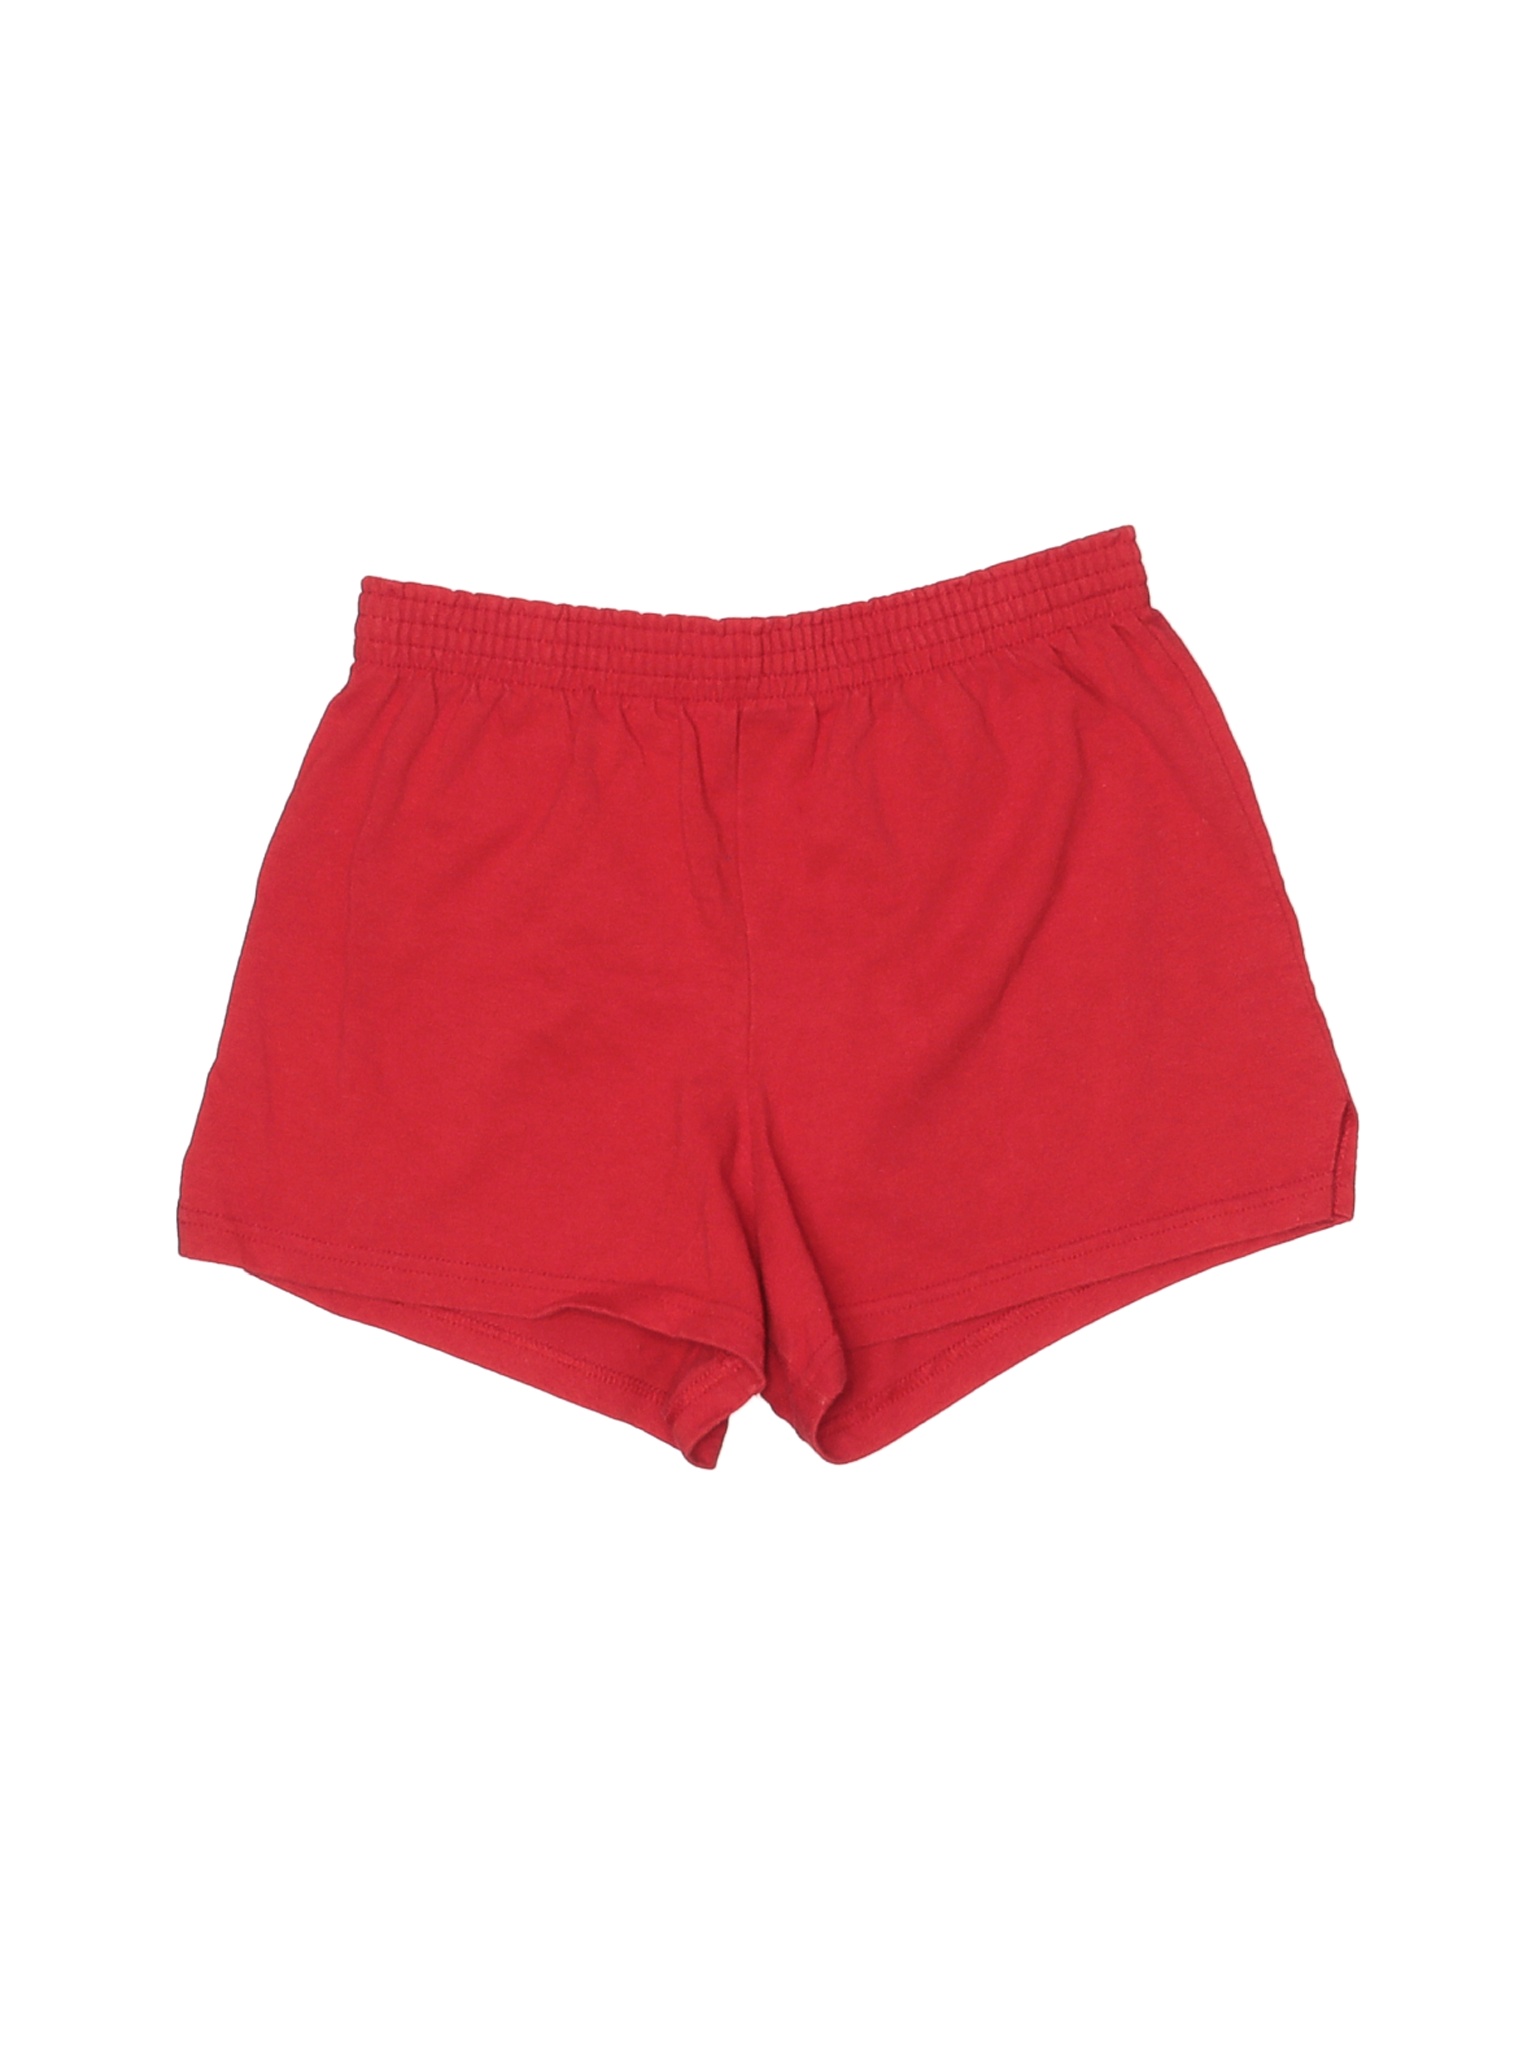 SOFFE Women Red Shorts S | eBay